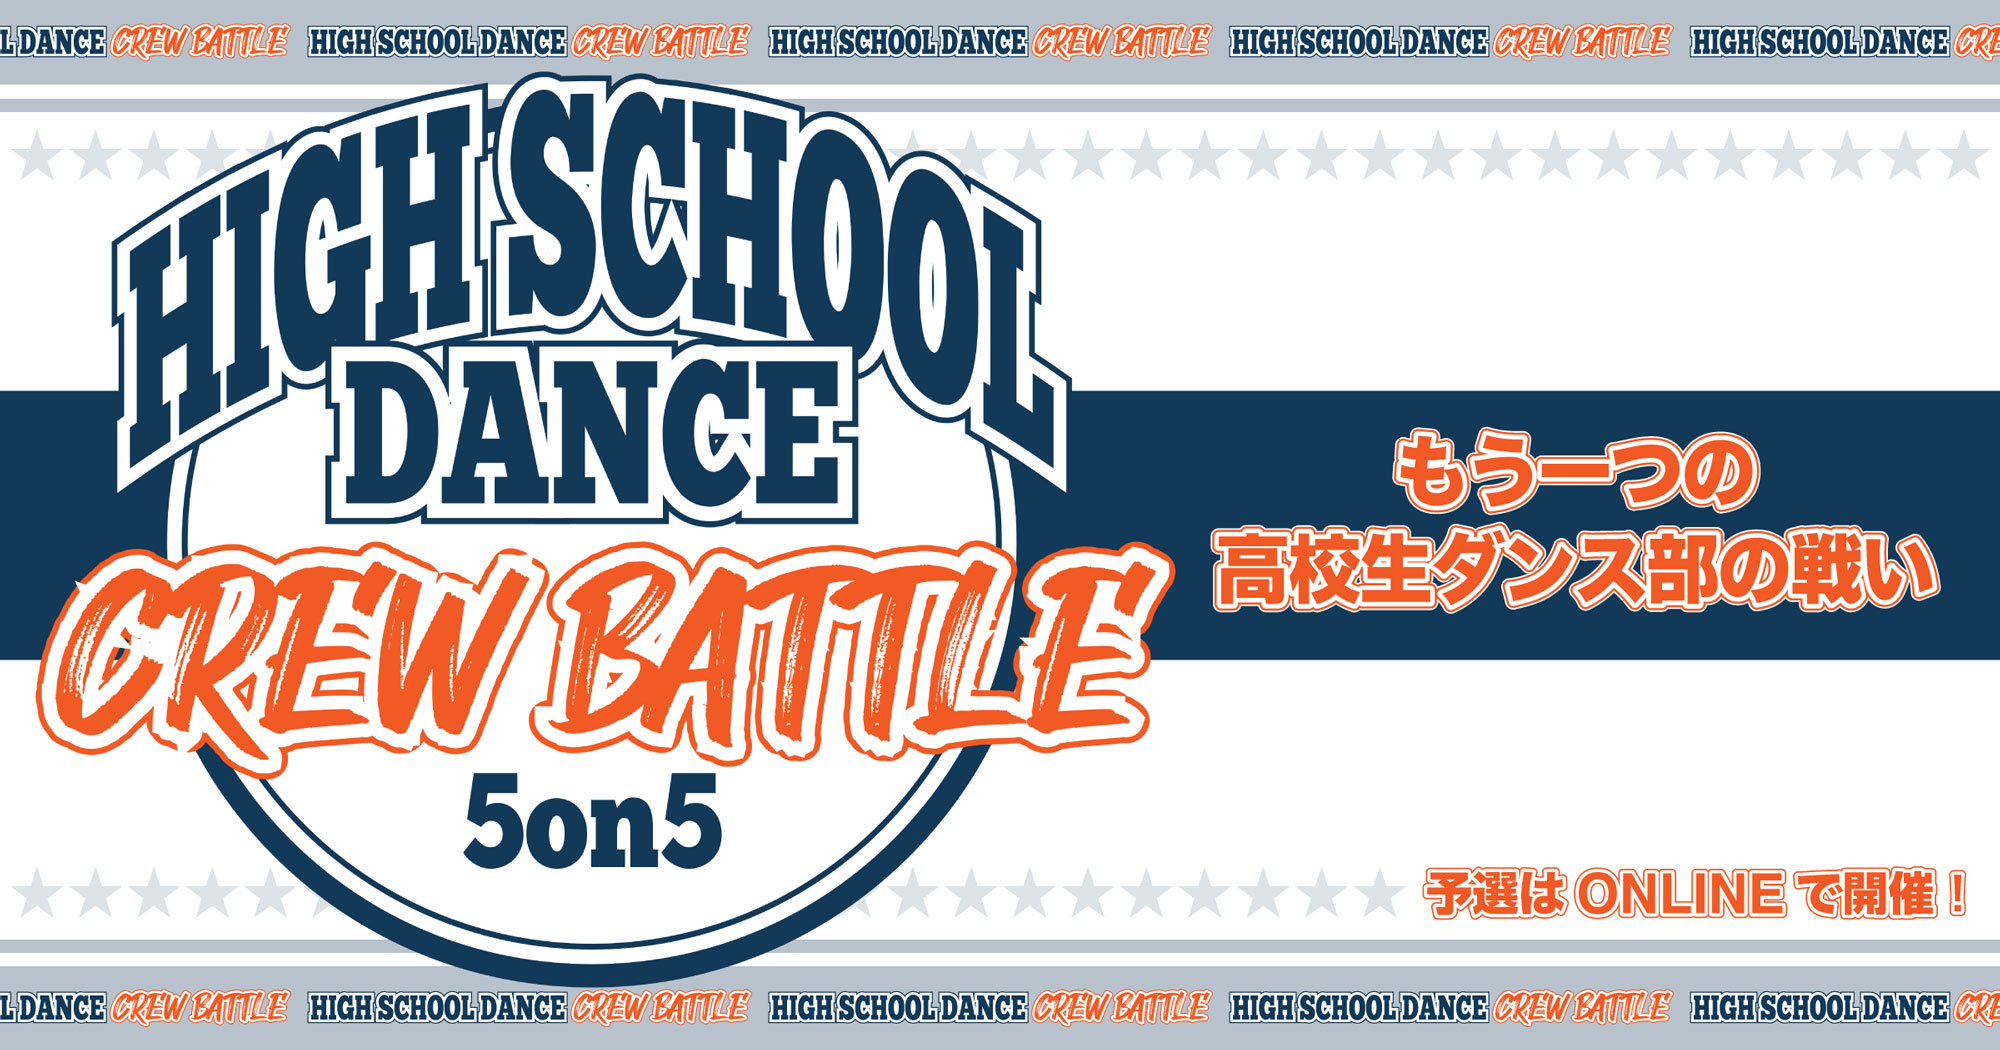 HIGH SCHOOL DANCE CREW BATTLE